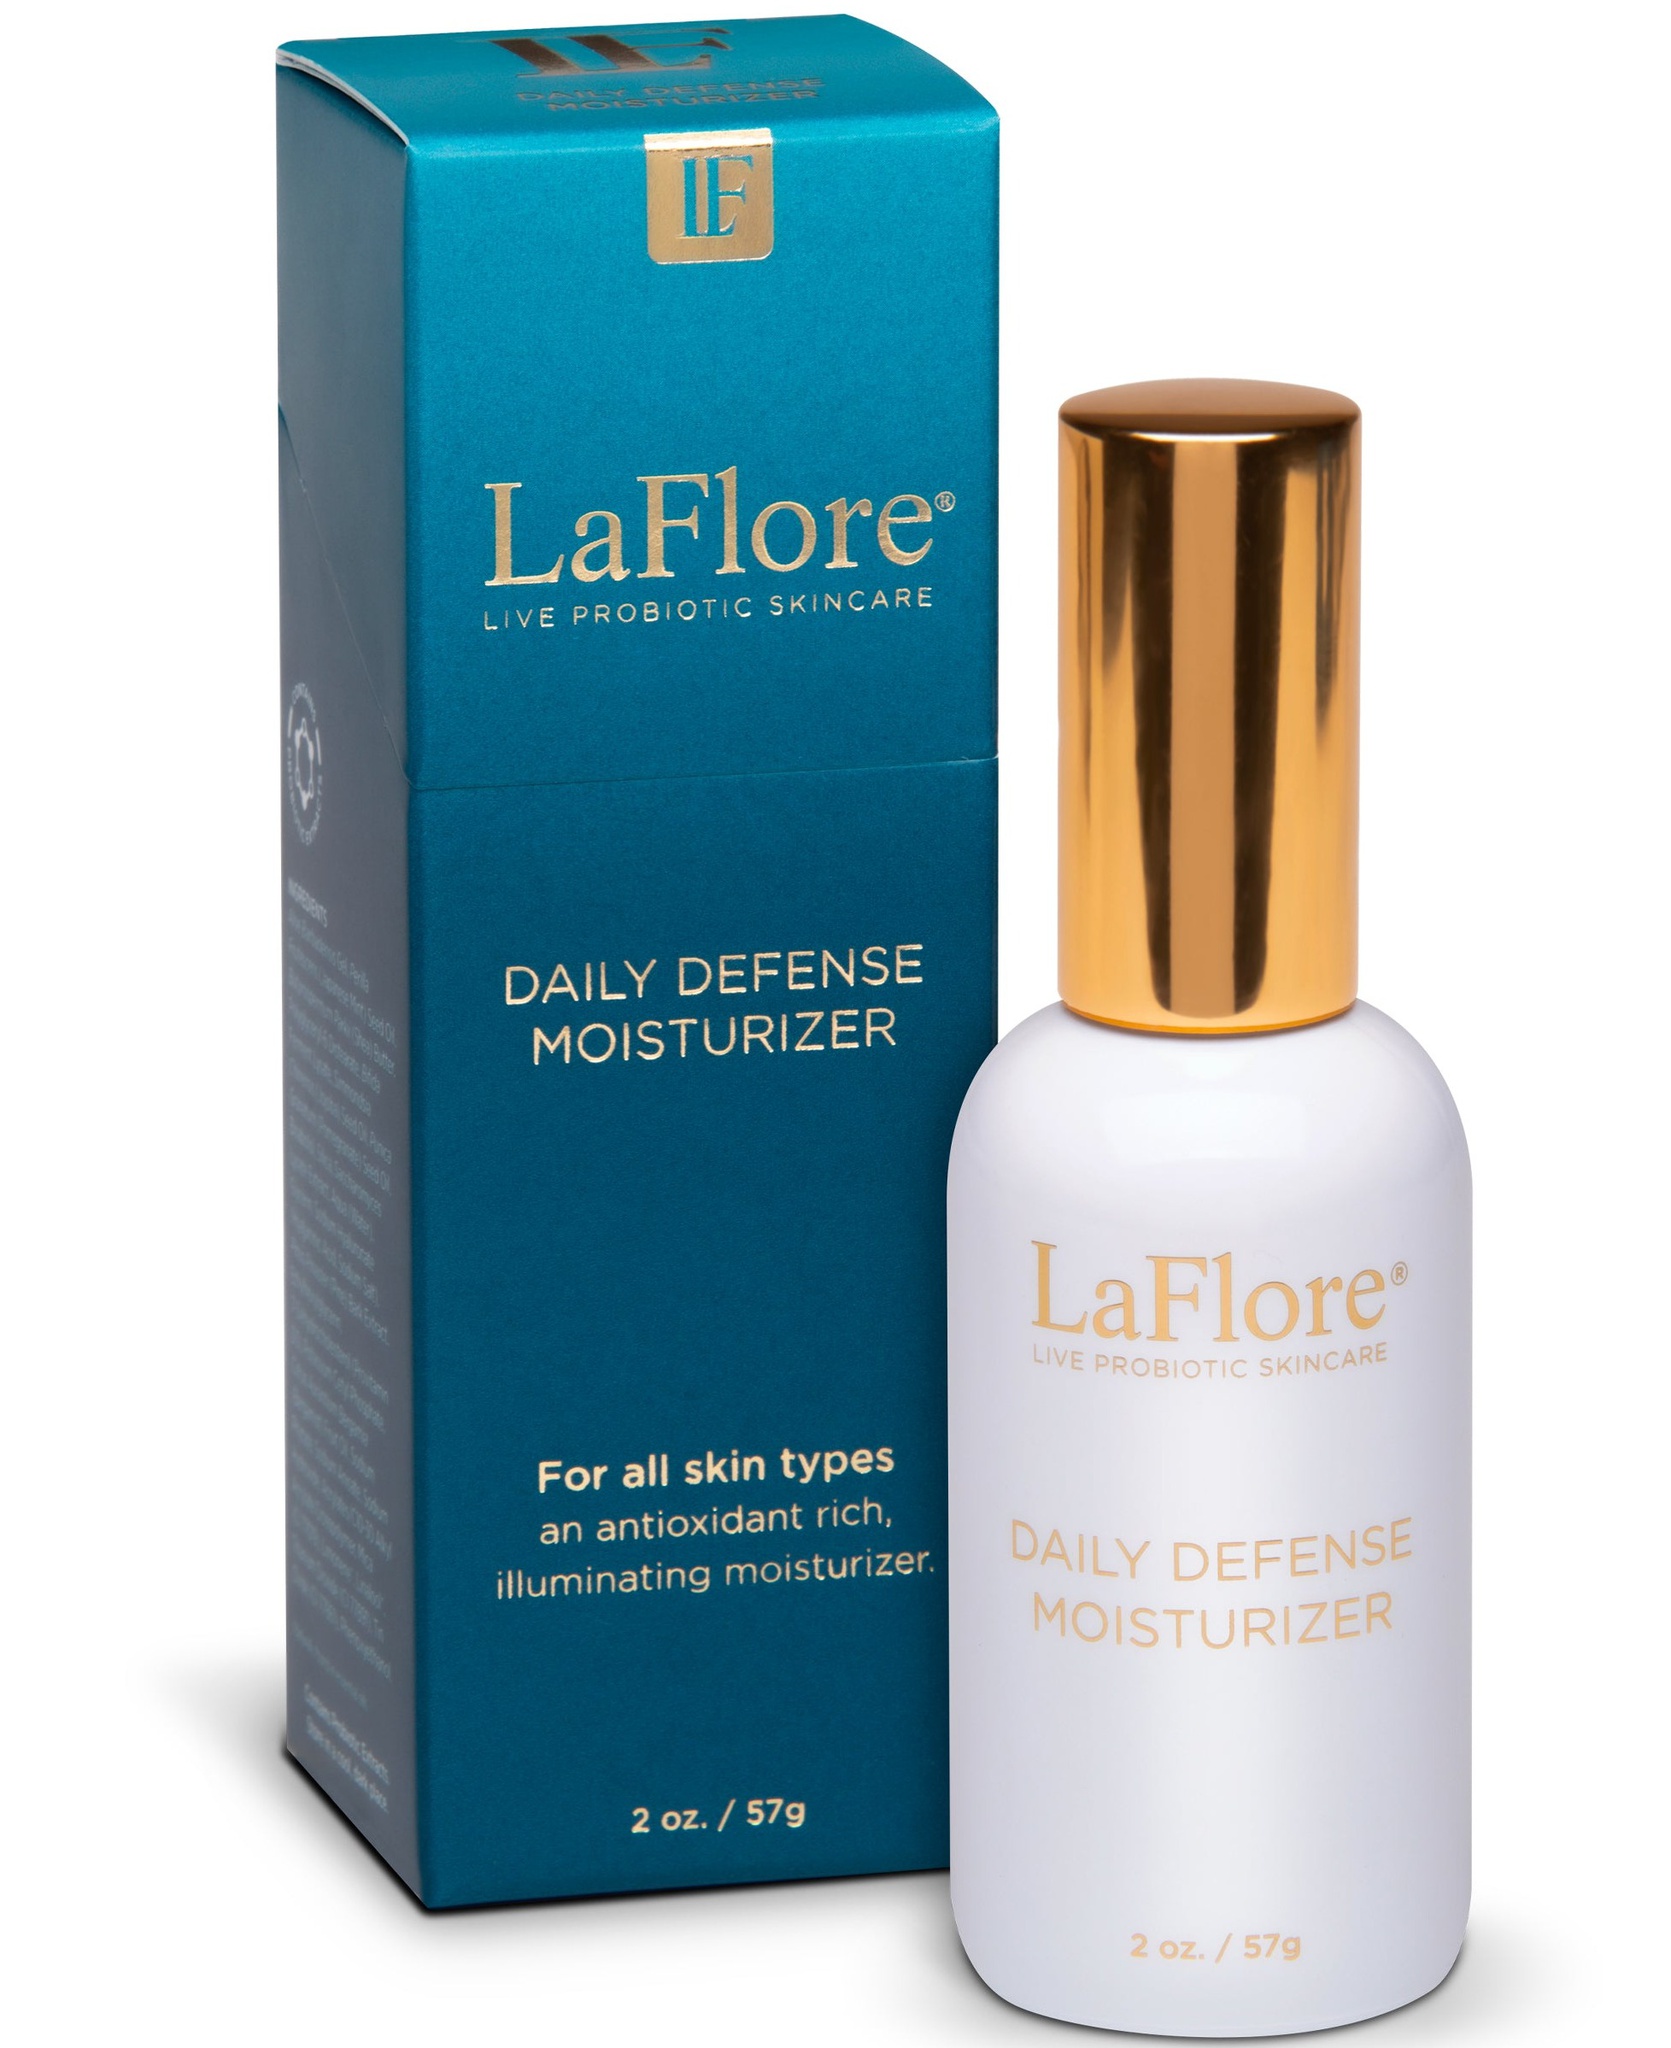 LaFlore Live Probiotic Skincare Daily Defense Moisturizer